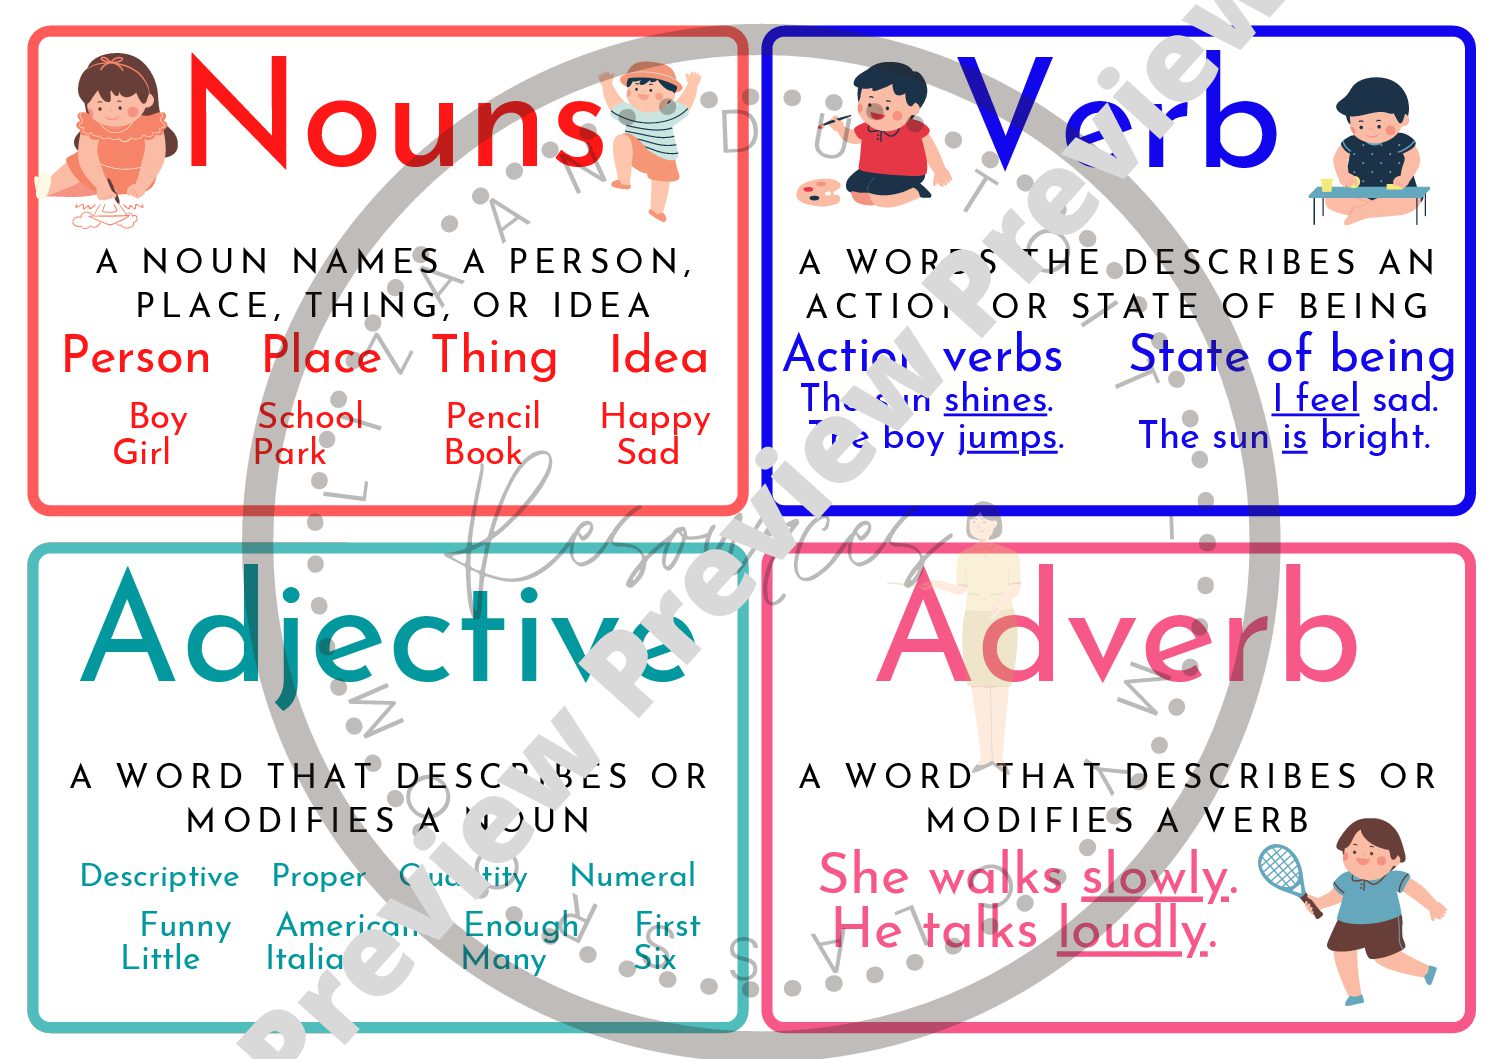 English – Parts of speech flashcards • Teacha!